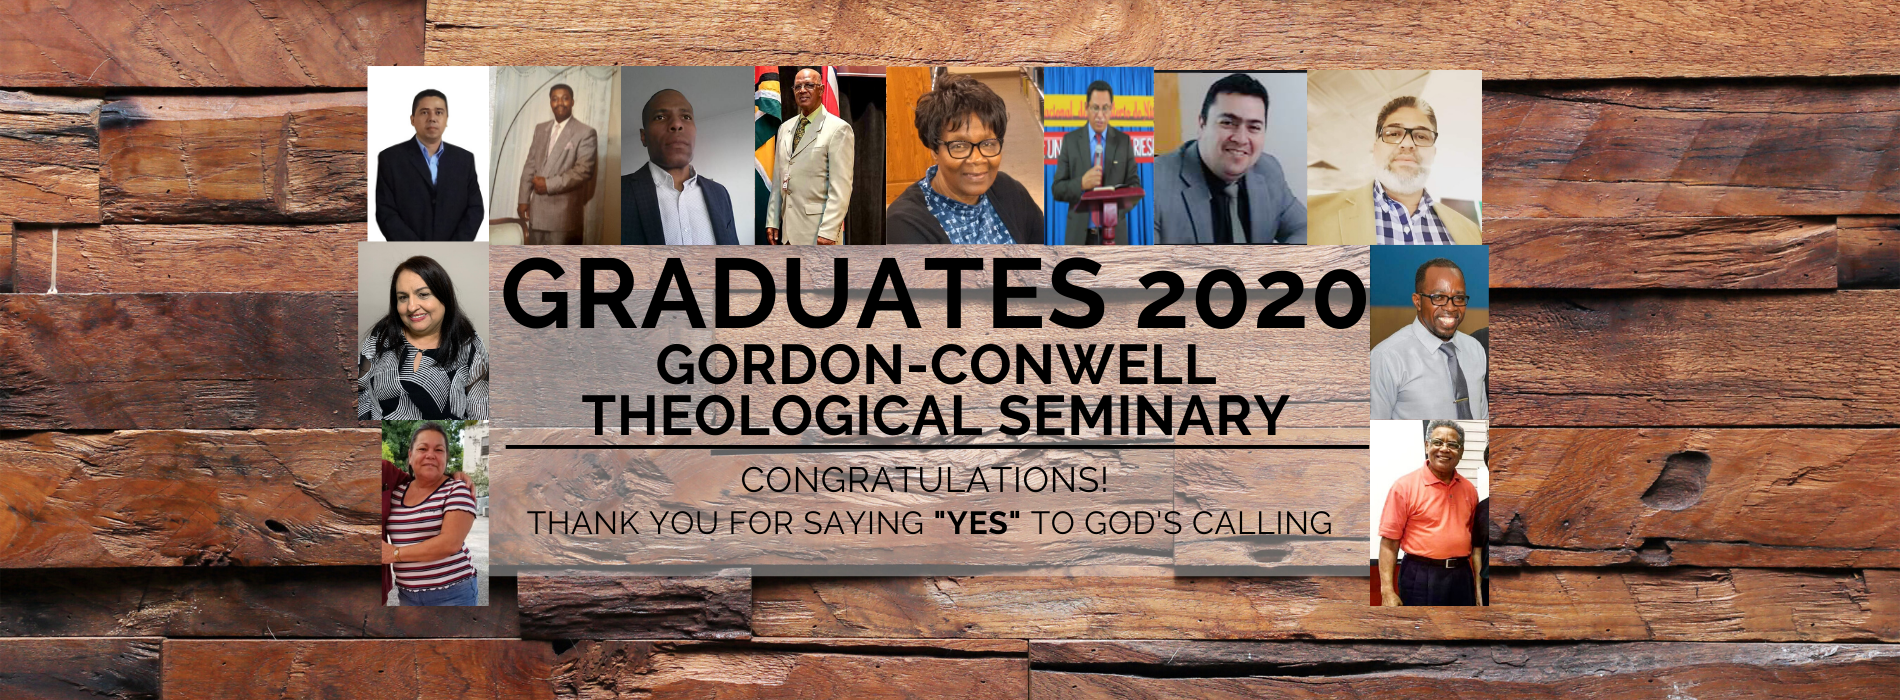 2020 Graduates Of Gordon-Conwell Theological Seminary